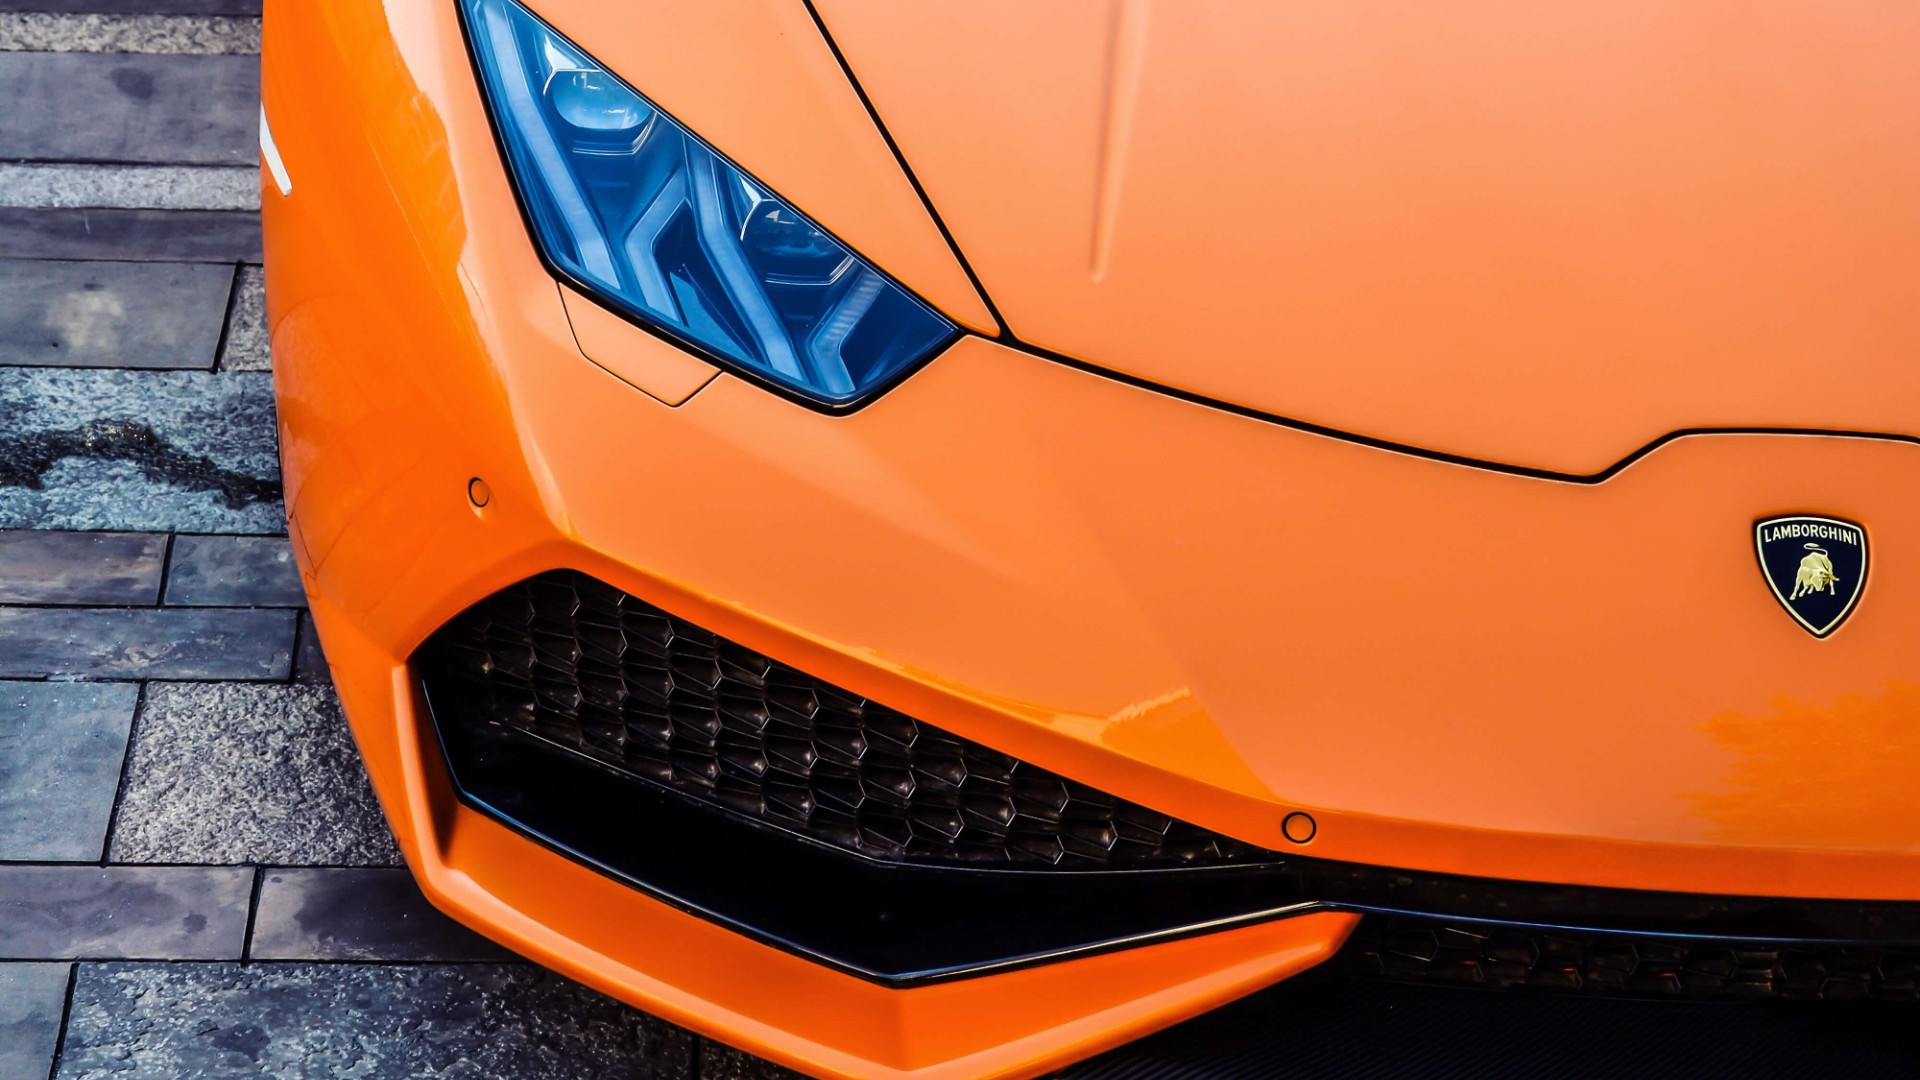 Lamborghini Aventador Insurance Header Image